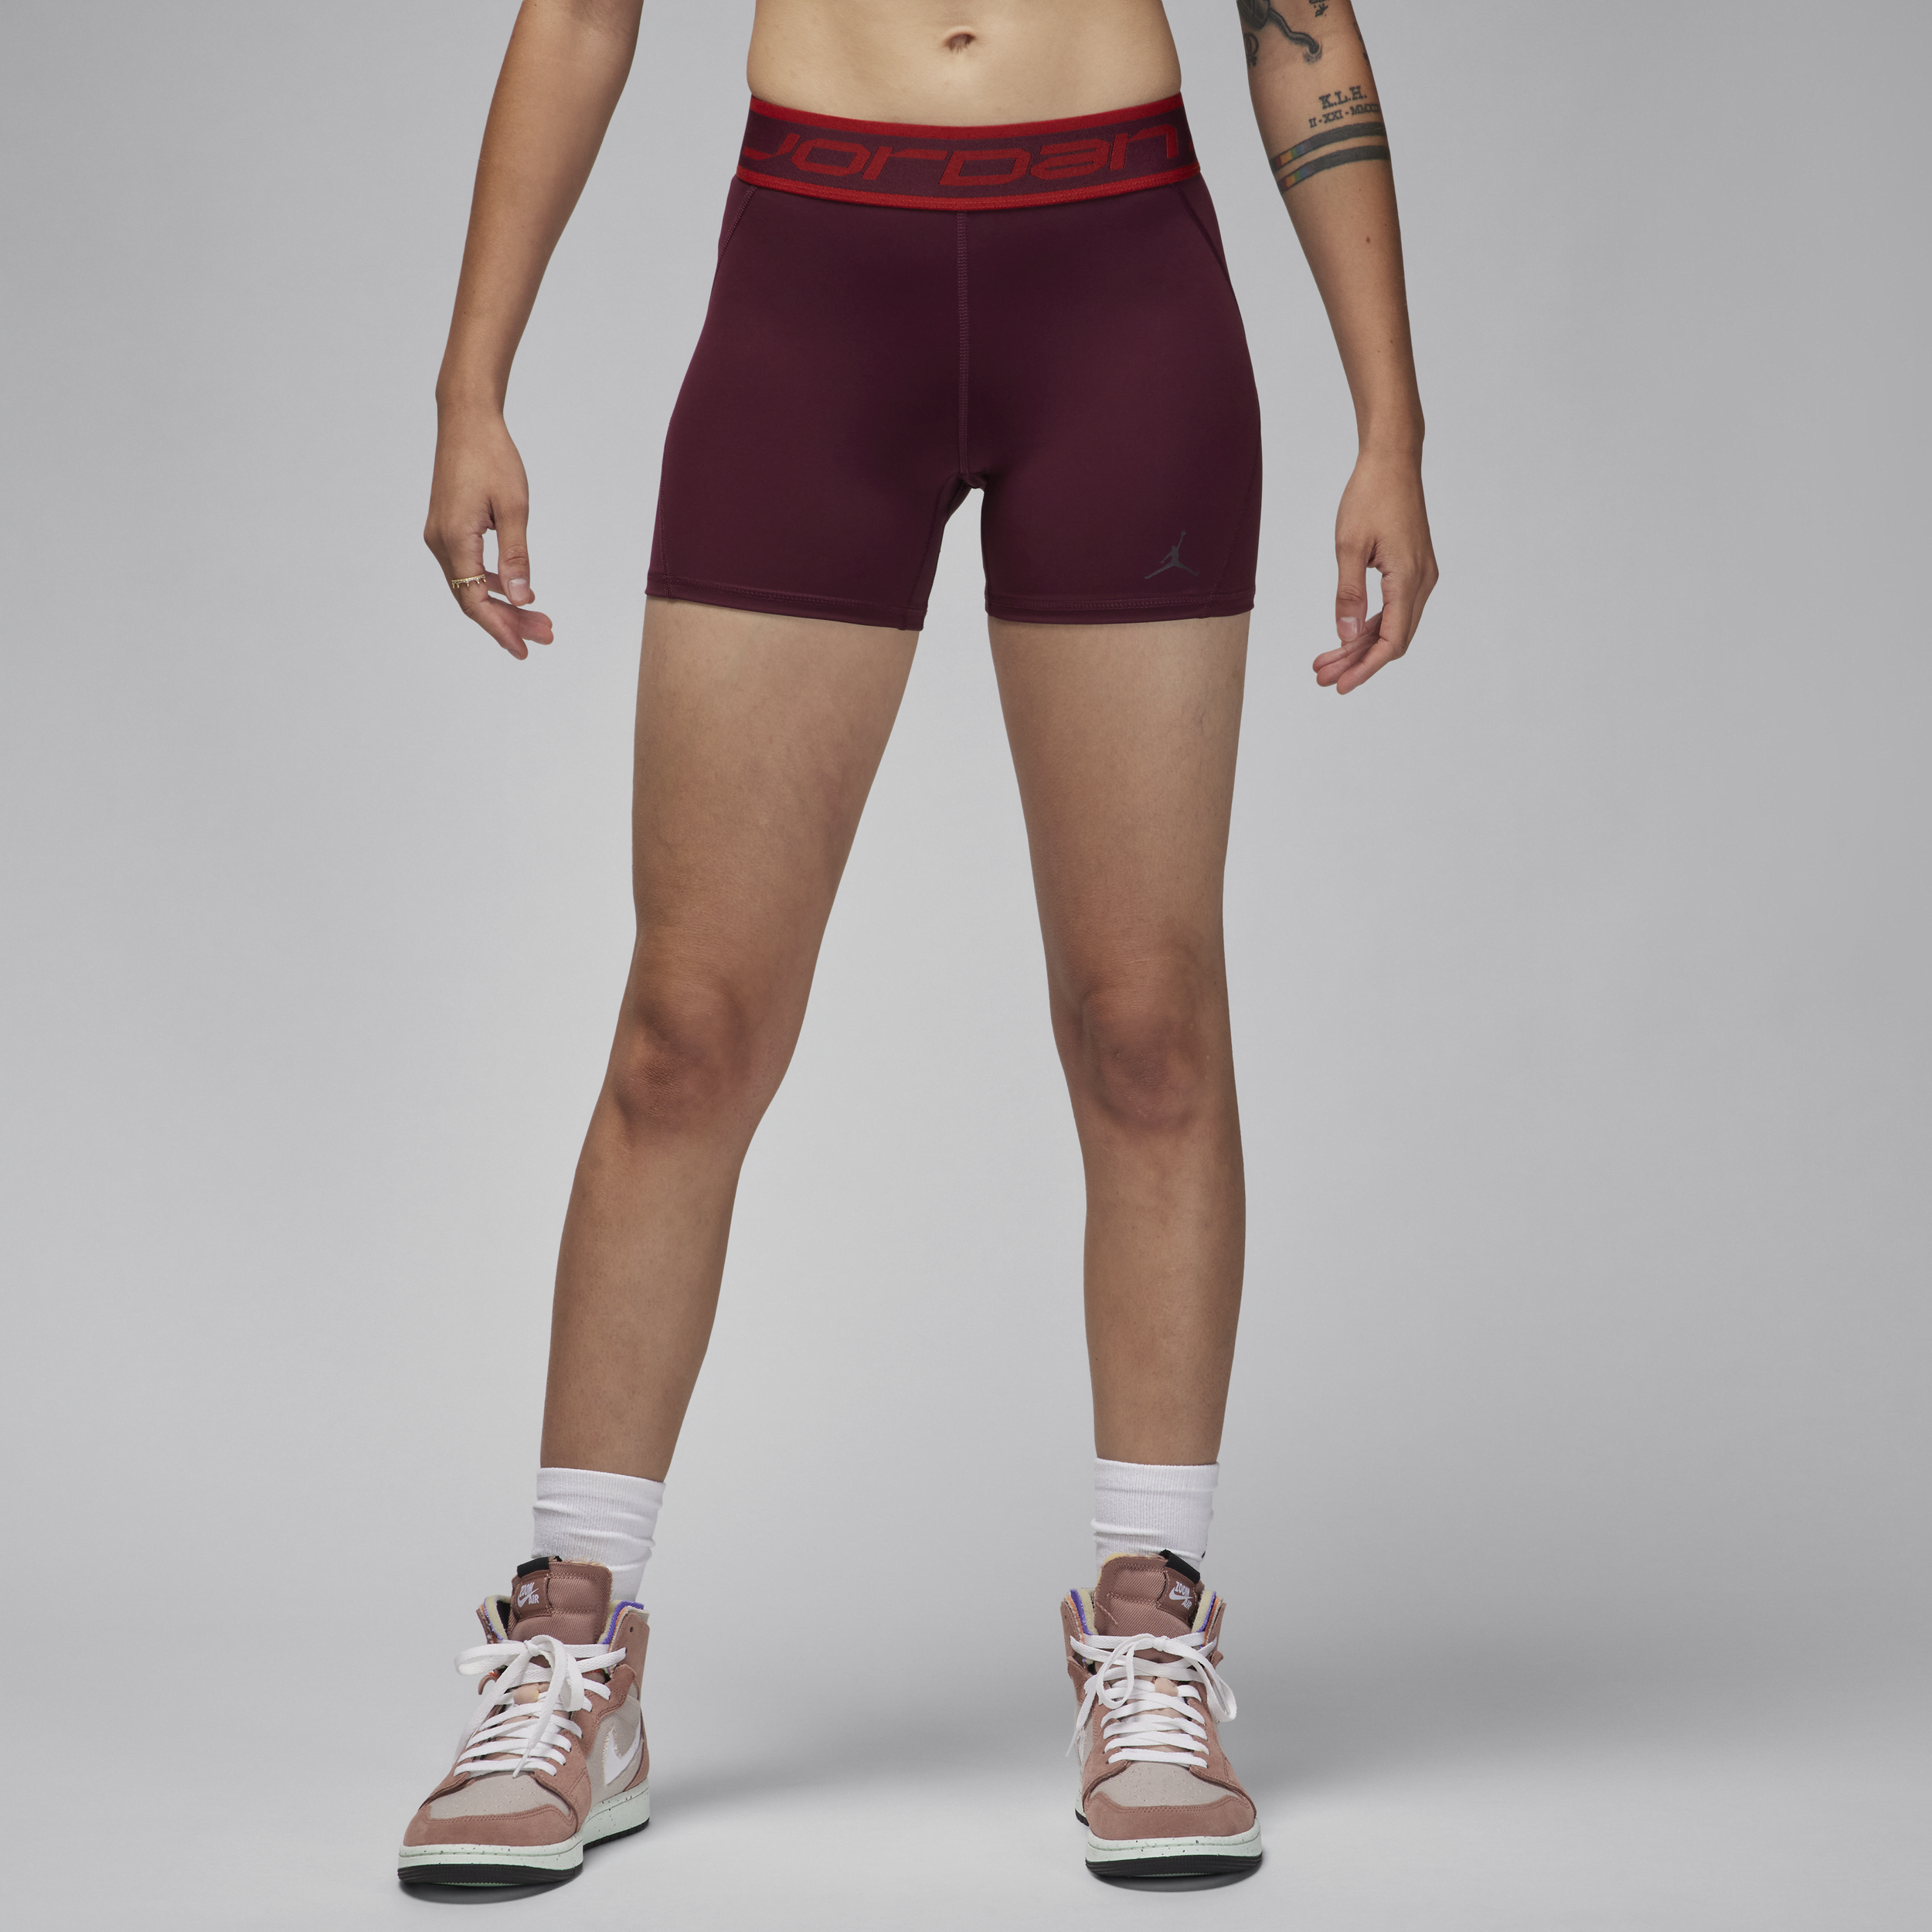 Nike Shorts 13 cm Jordan Sport – Donna - Rosso